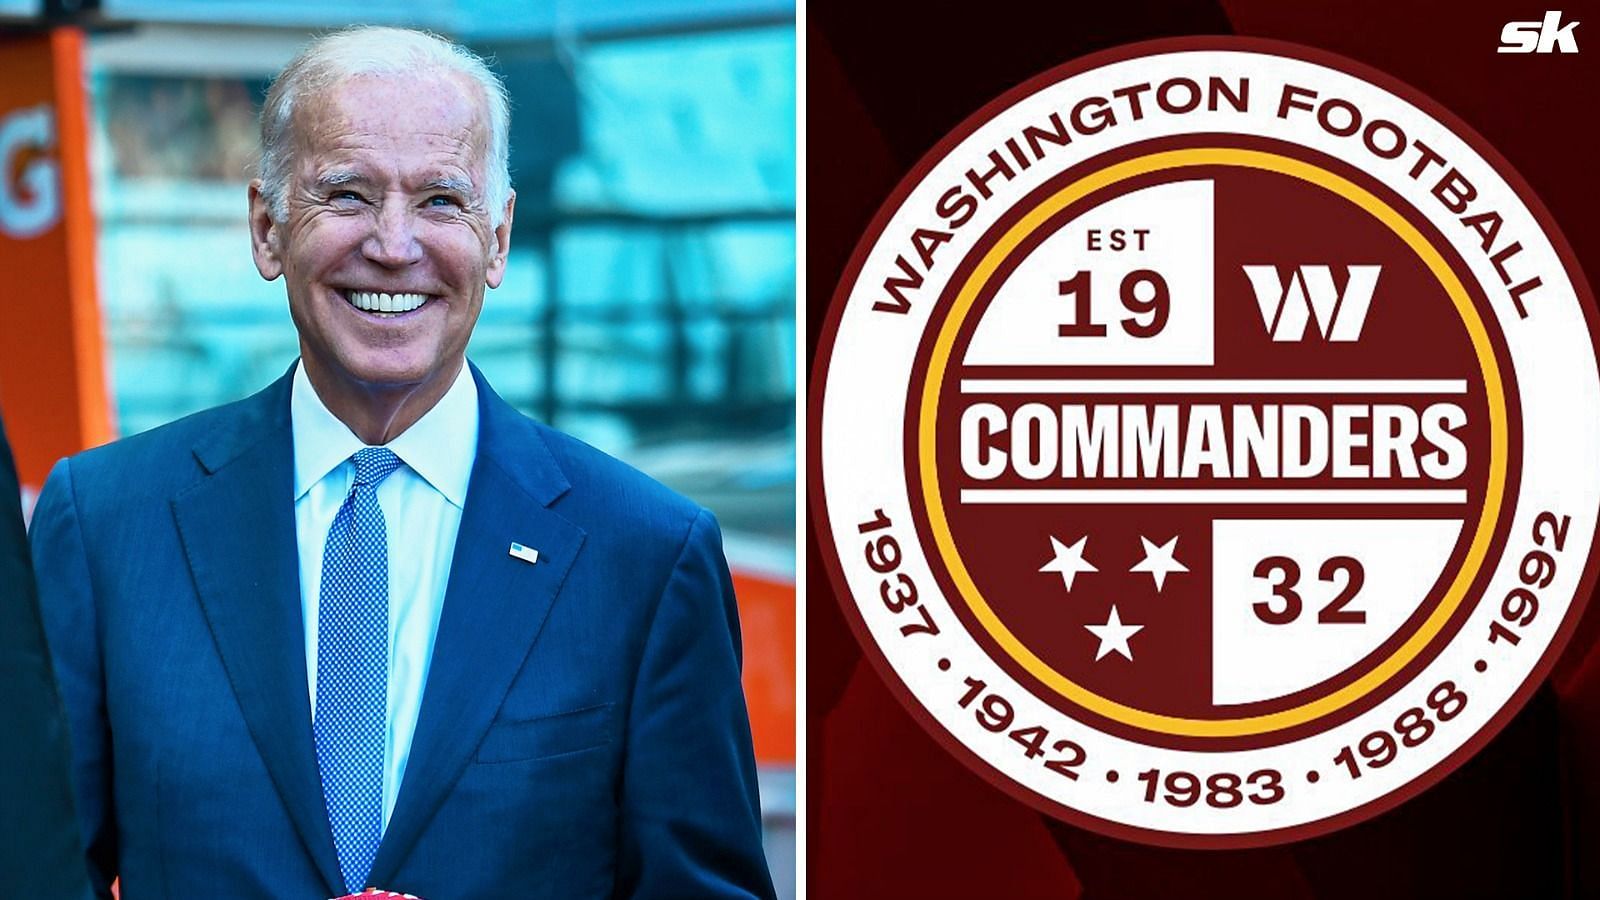 Washington fans react to new team name: 'Washington Commanders'